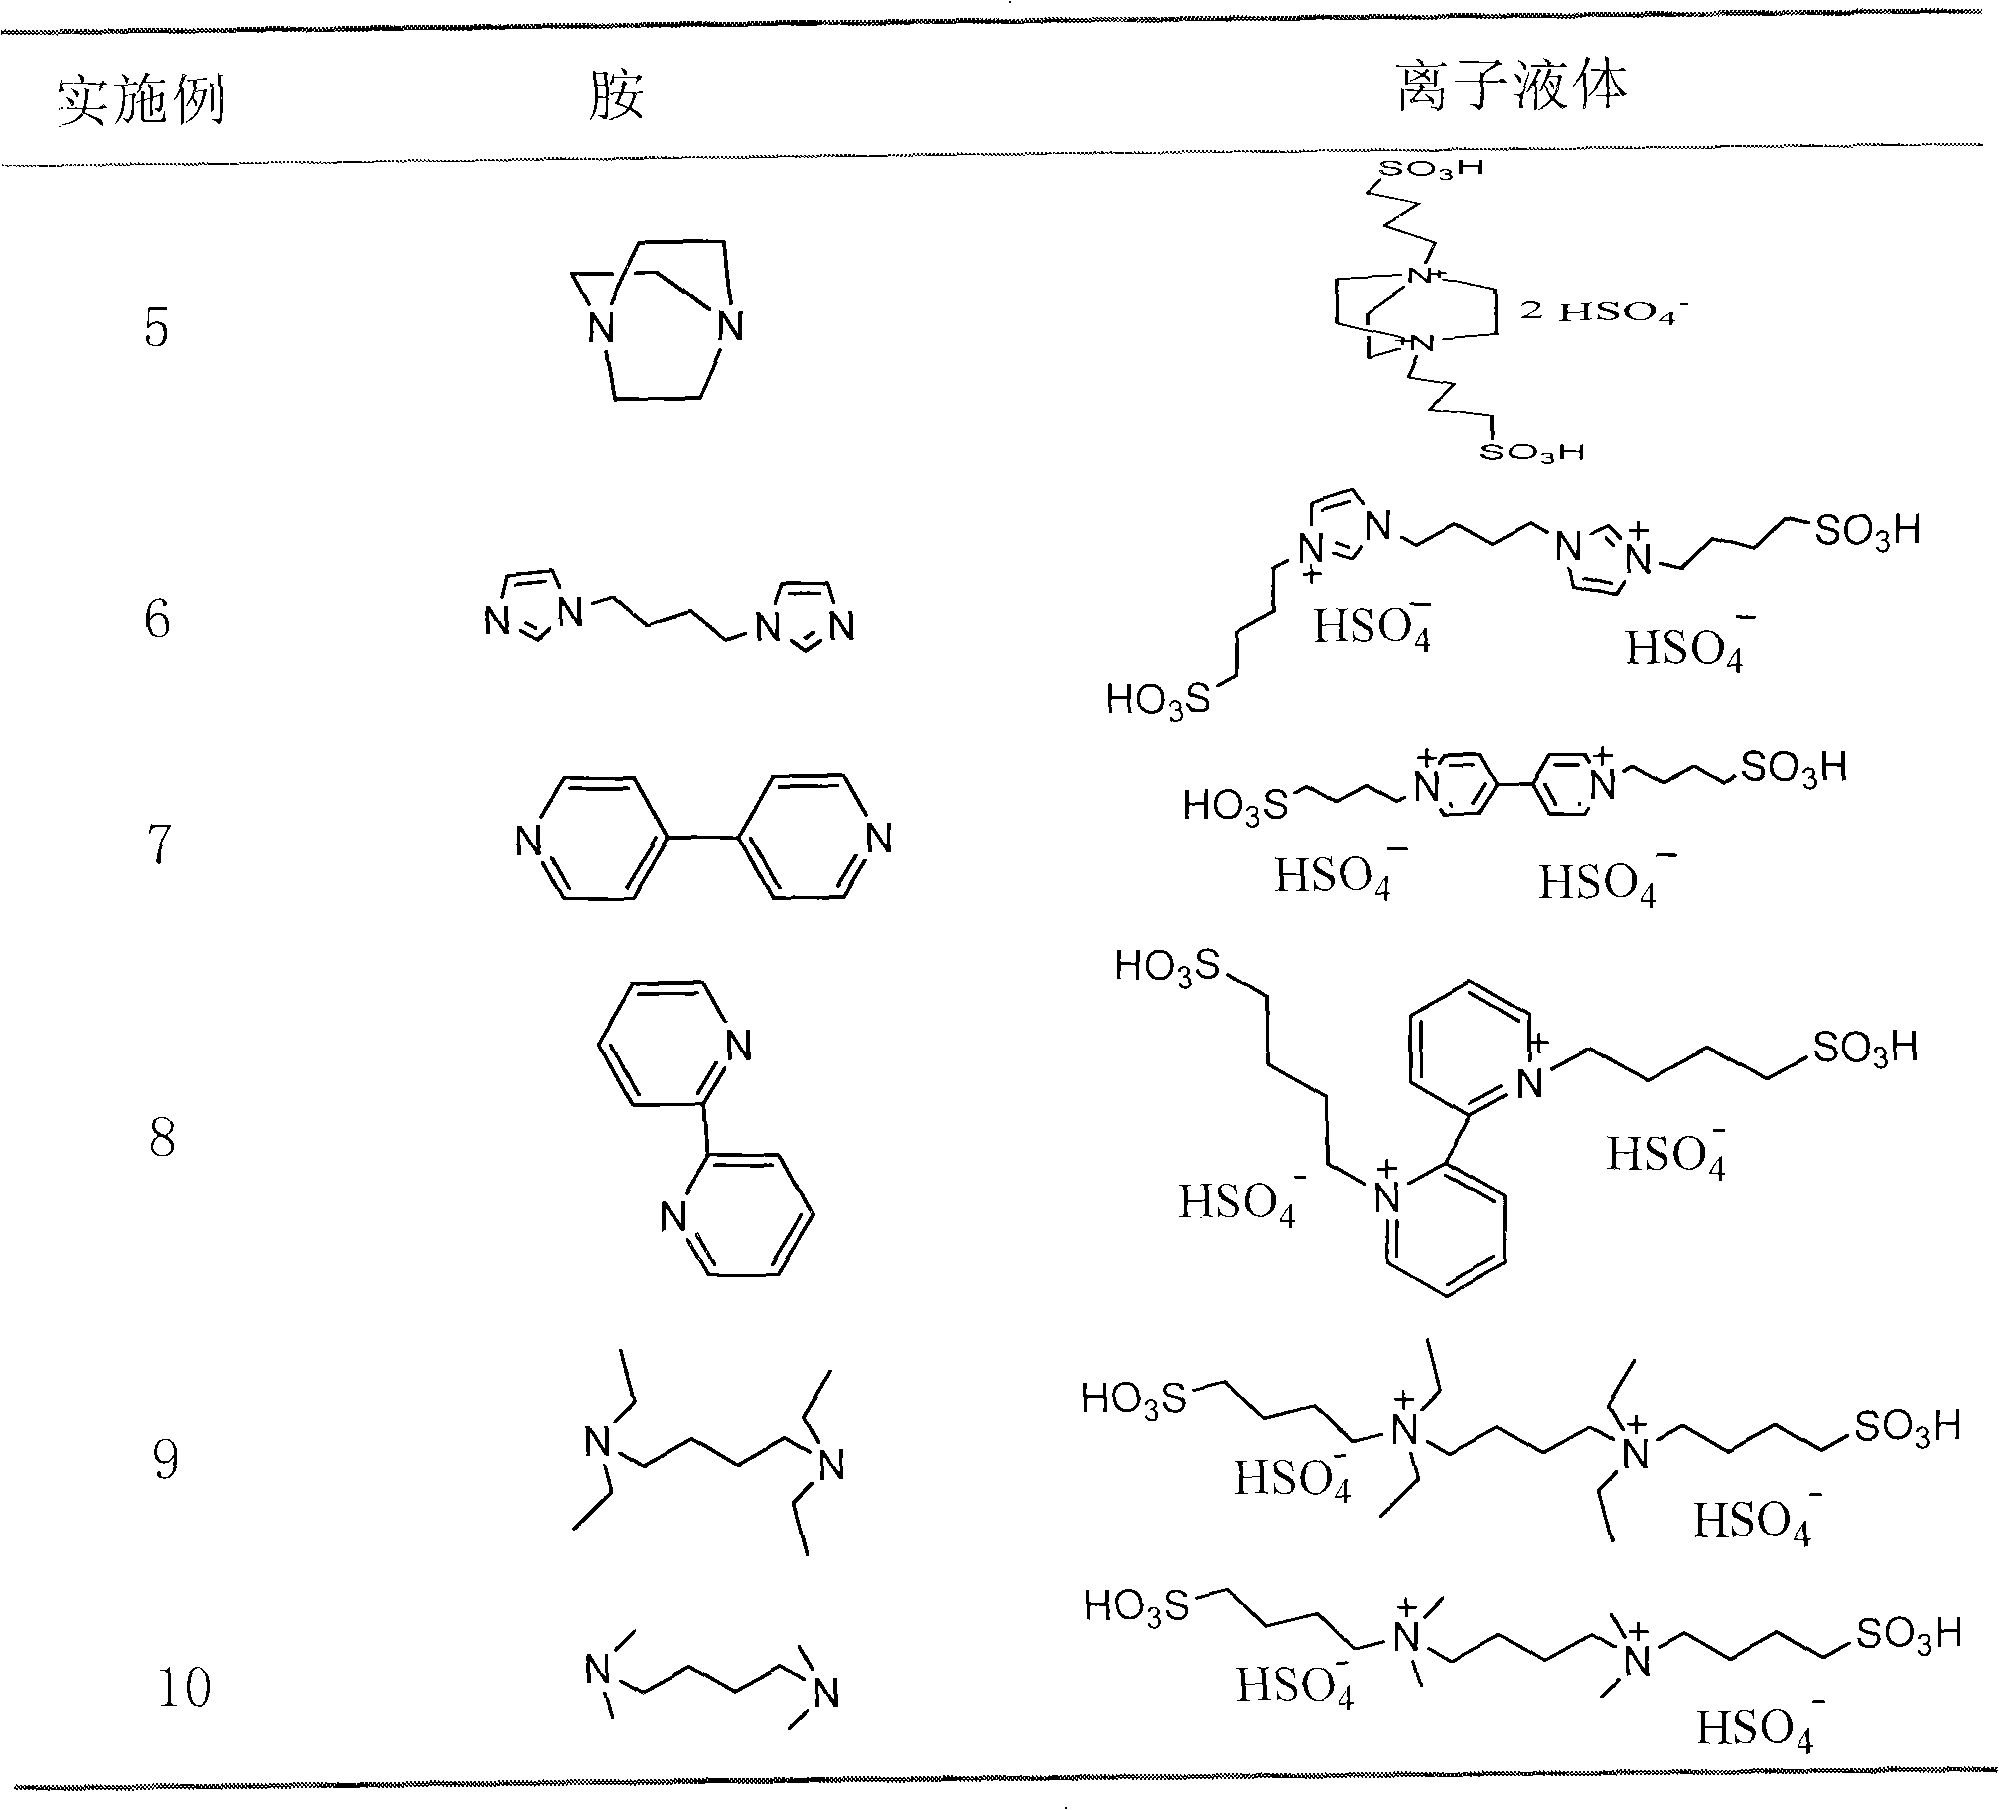 Preparation of multi-sulfonic functional ion liquid